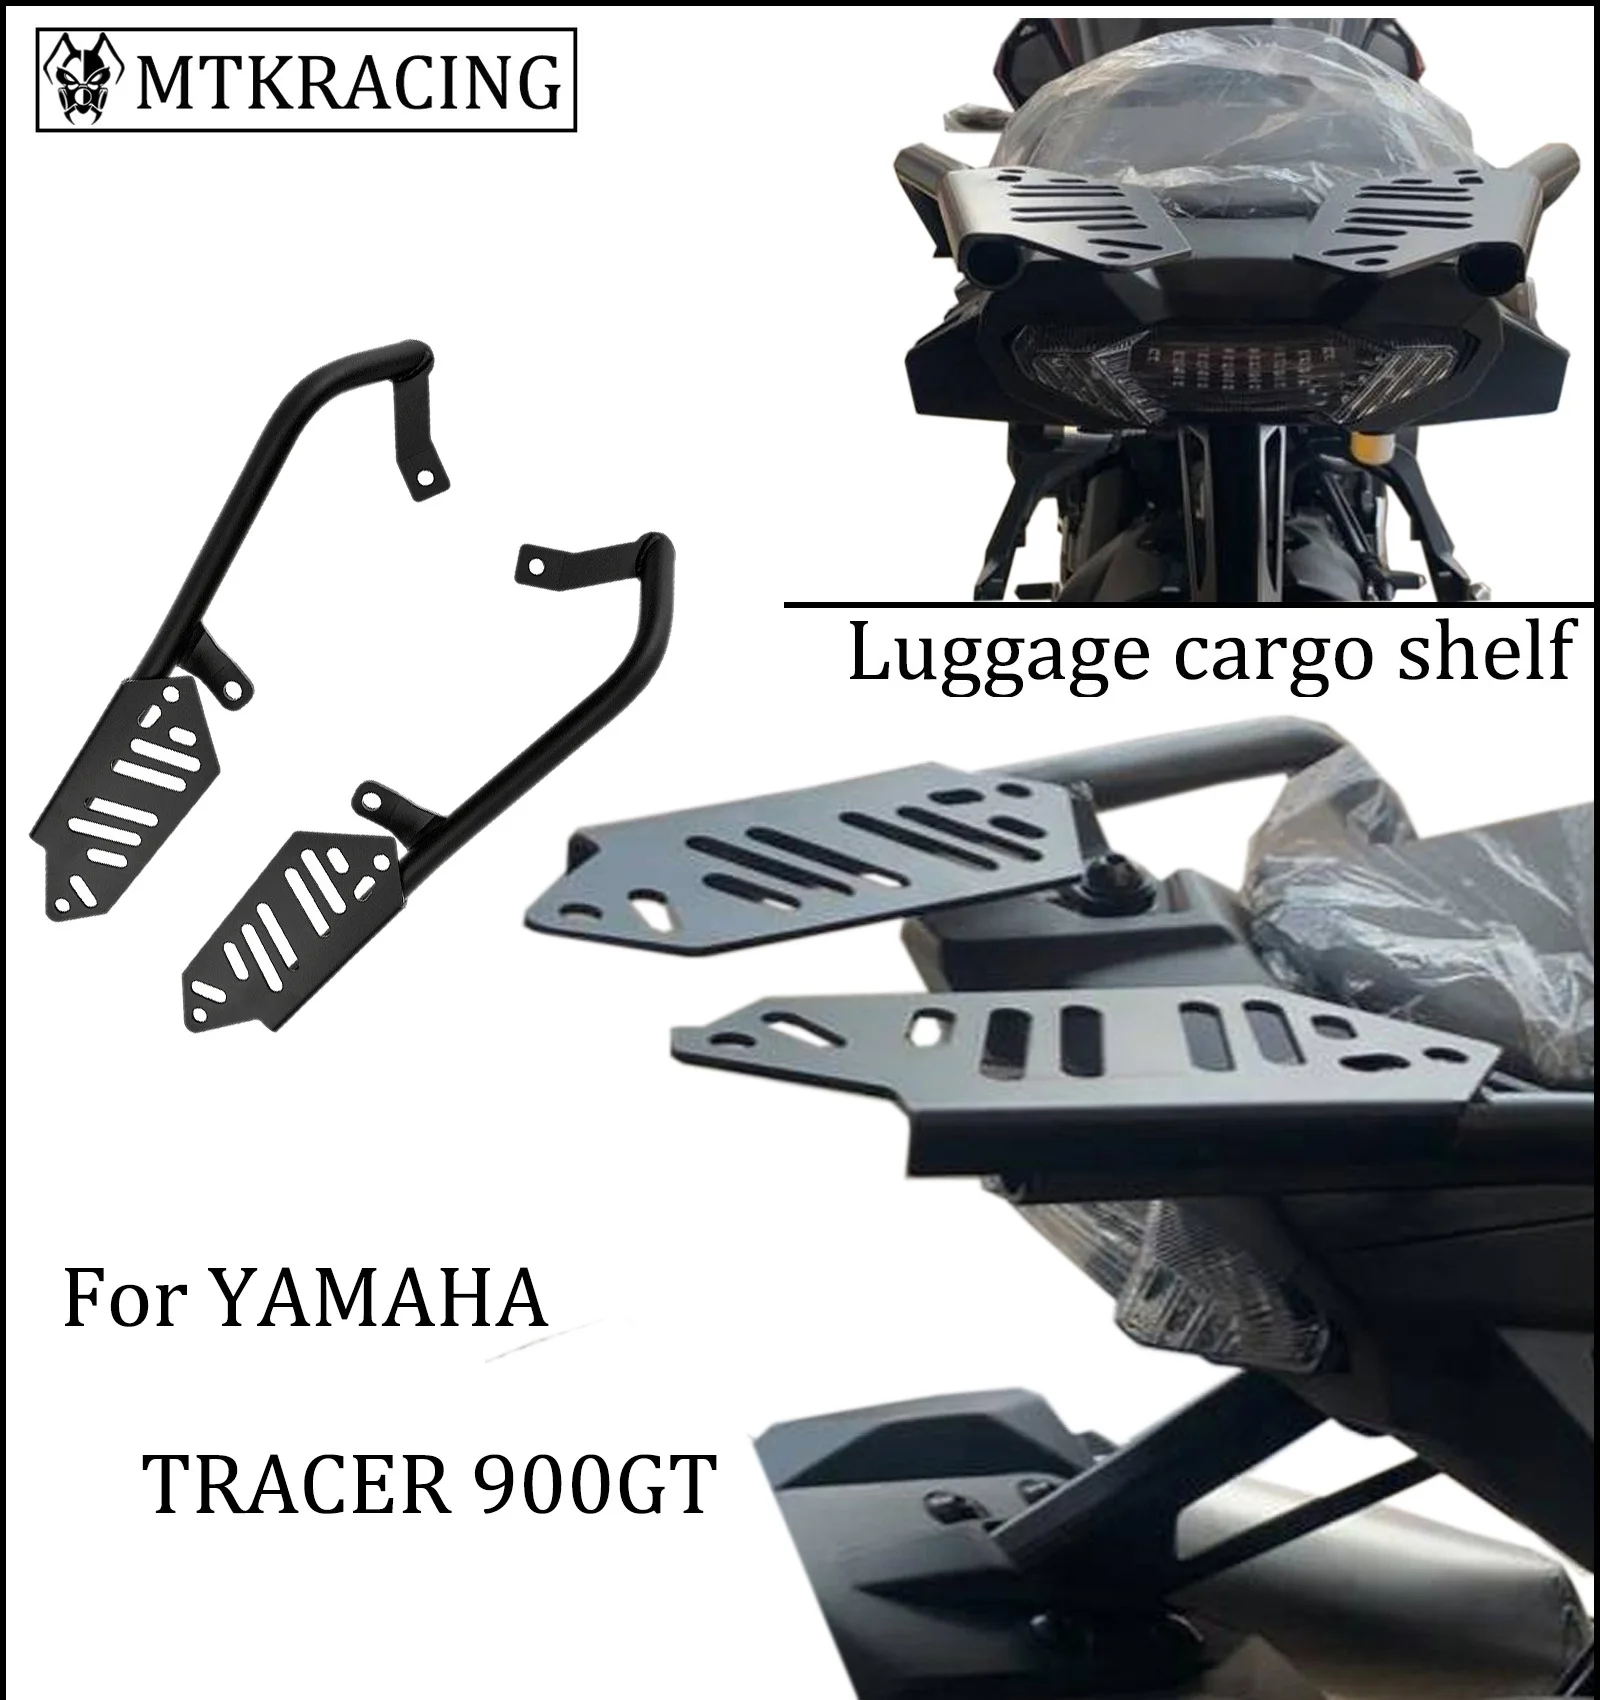 

MTKRACING FOR YAMAHA Tracer 900 GT TRACER 900GT 2017-2021 Rear Support Luggage Rack Saddle Support Bag Carrier Rack Tit